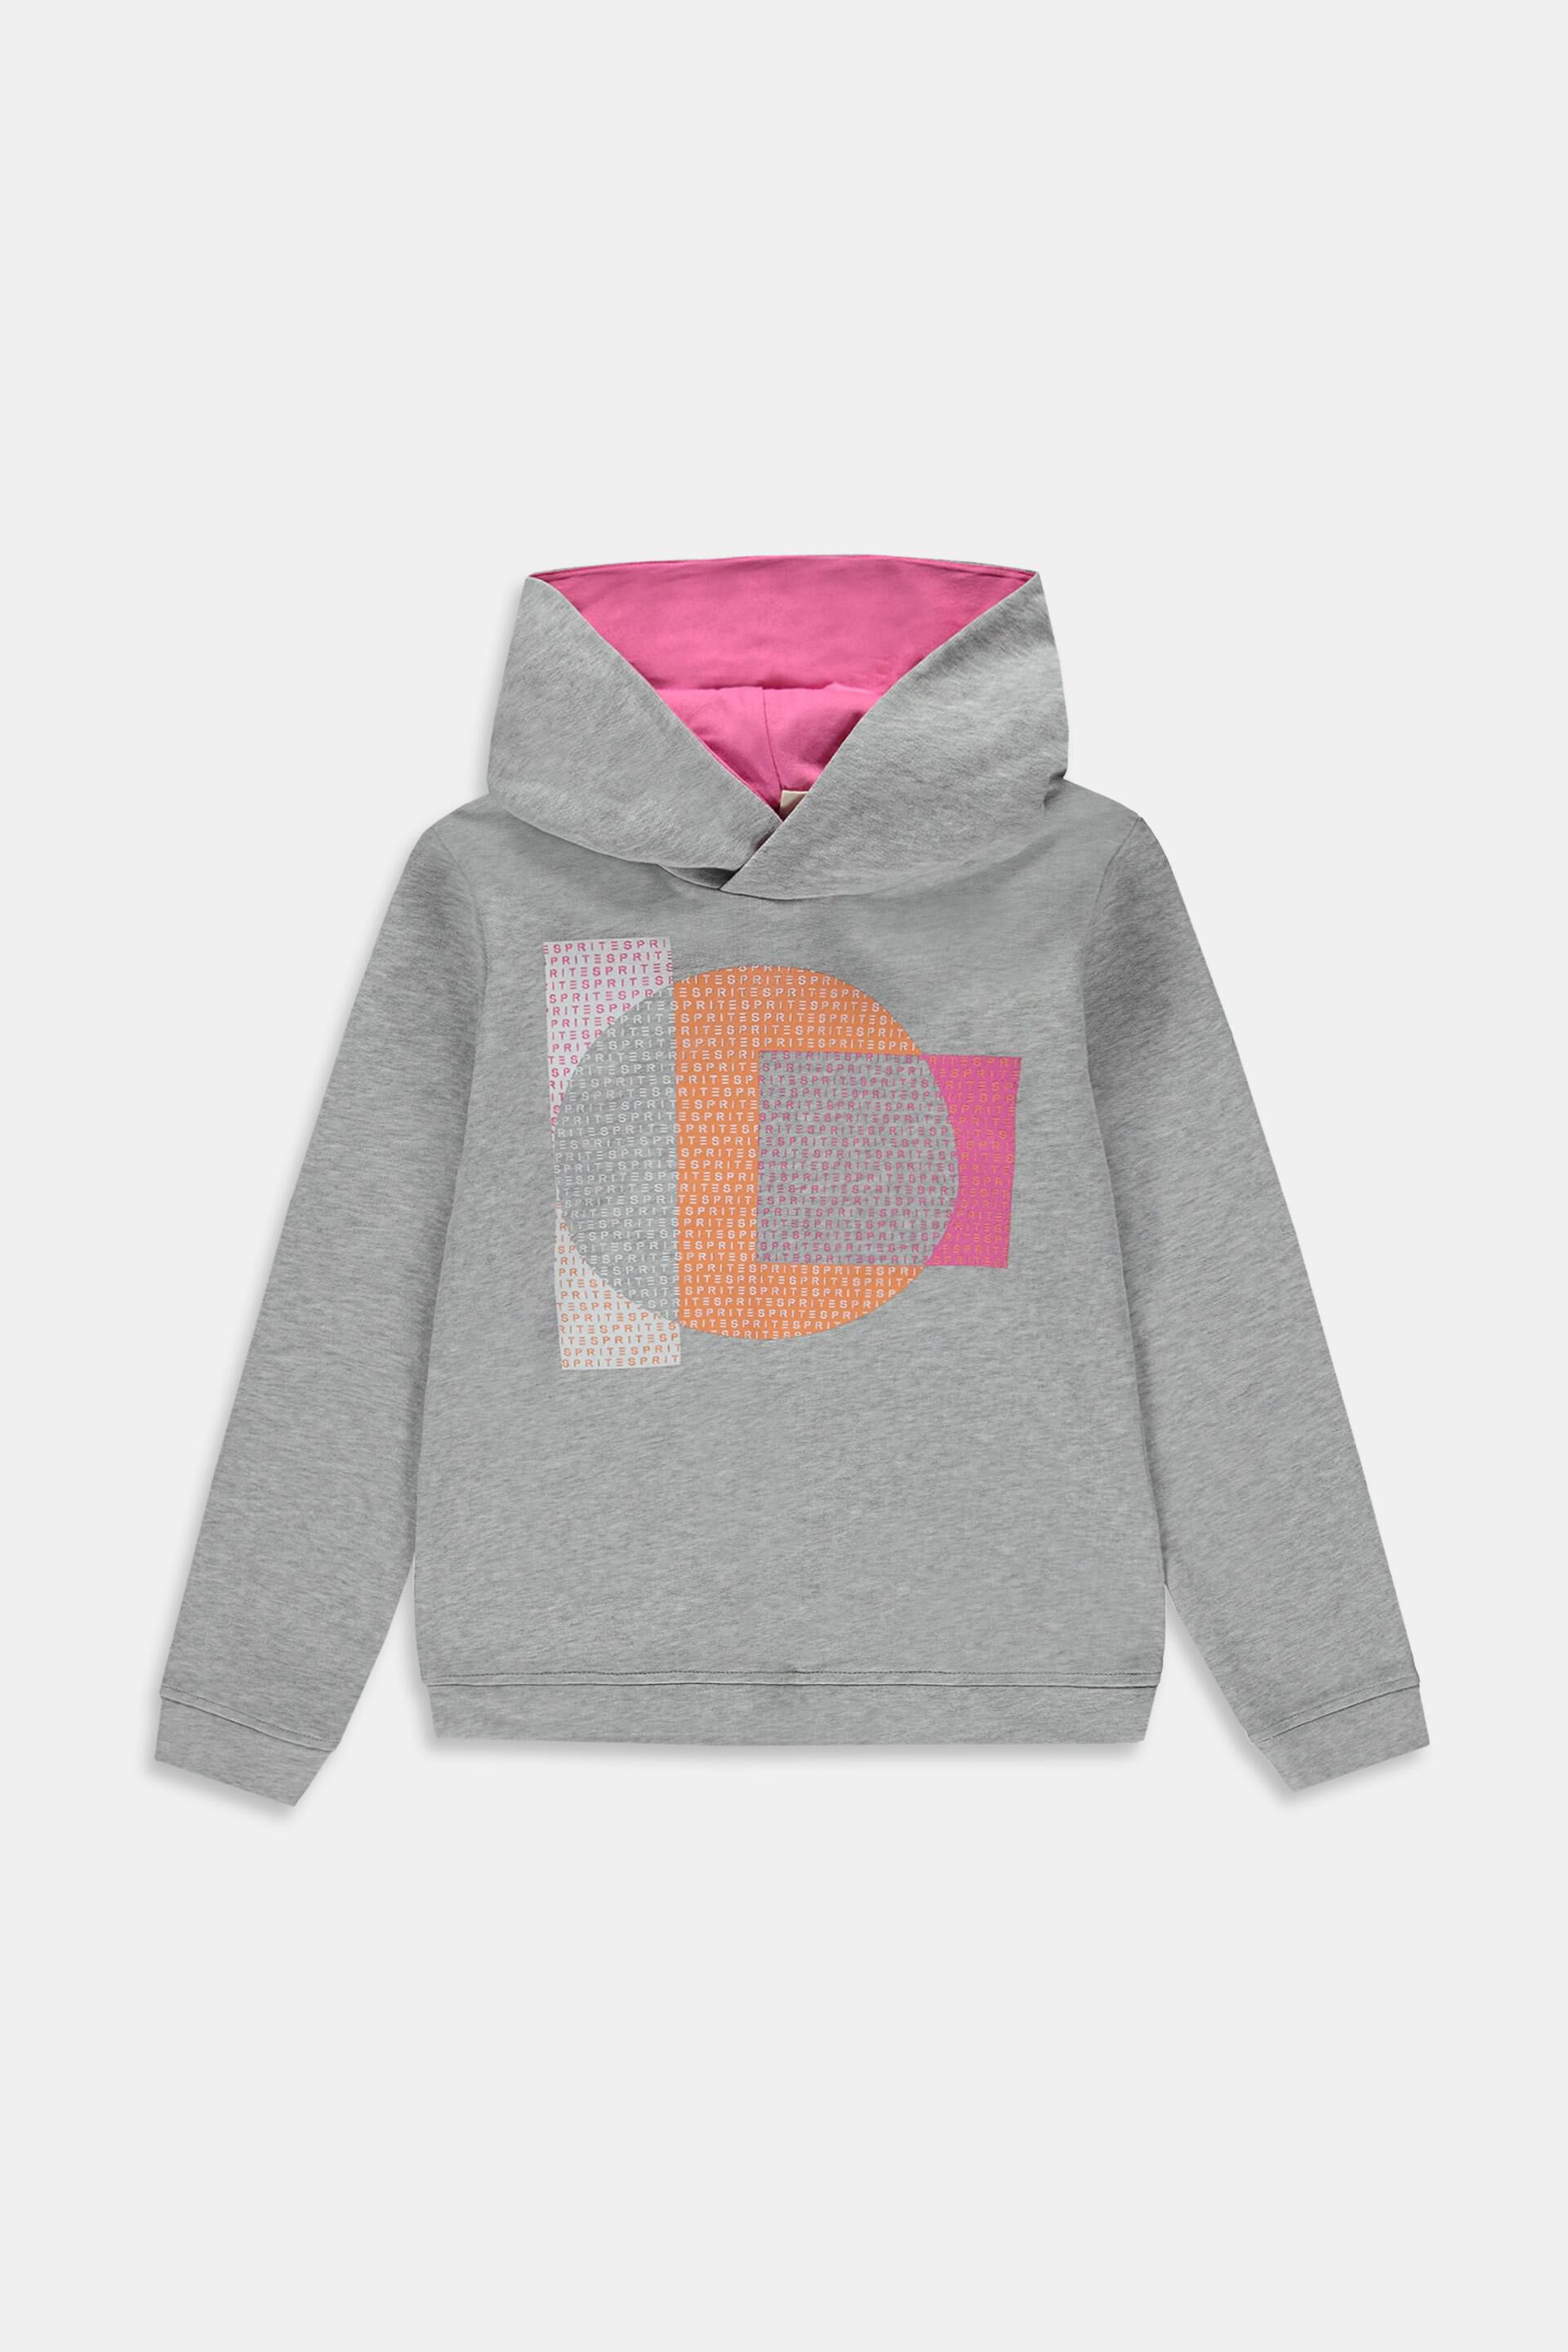 Esprit chest Cotton print with on hoodie geo